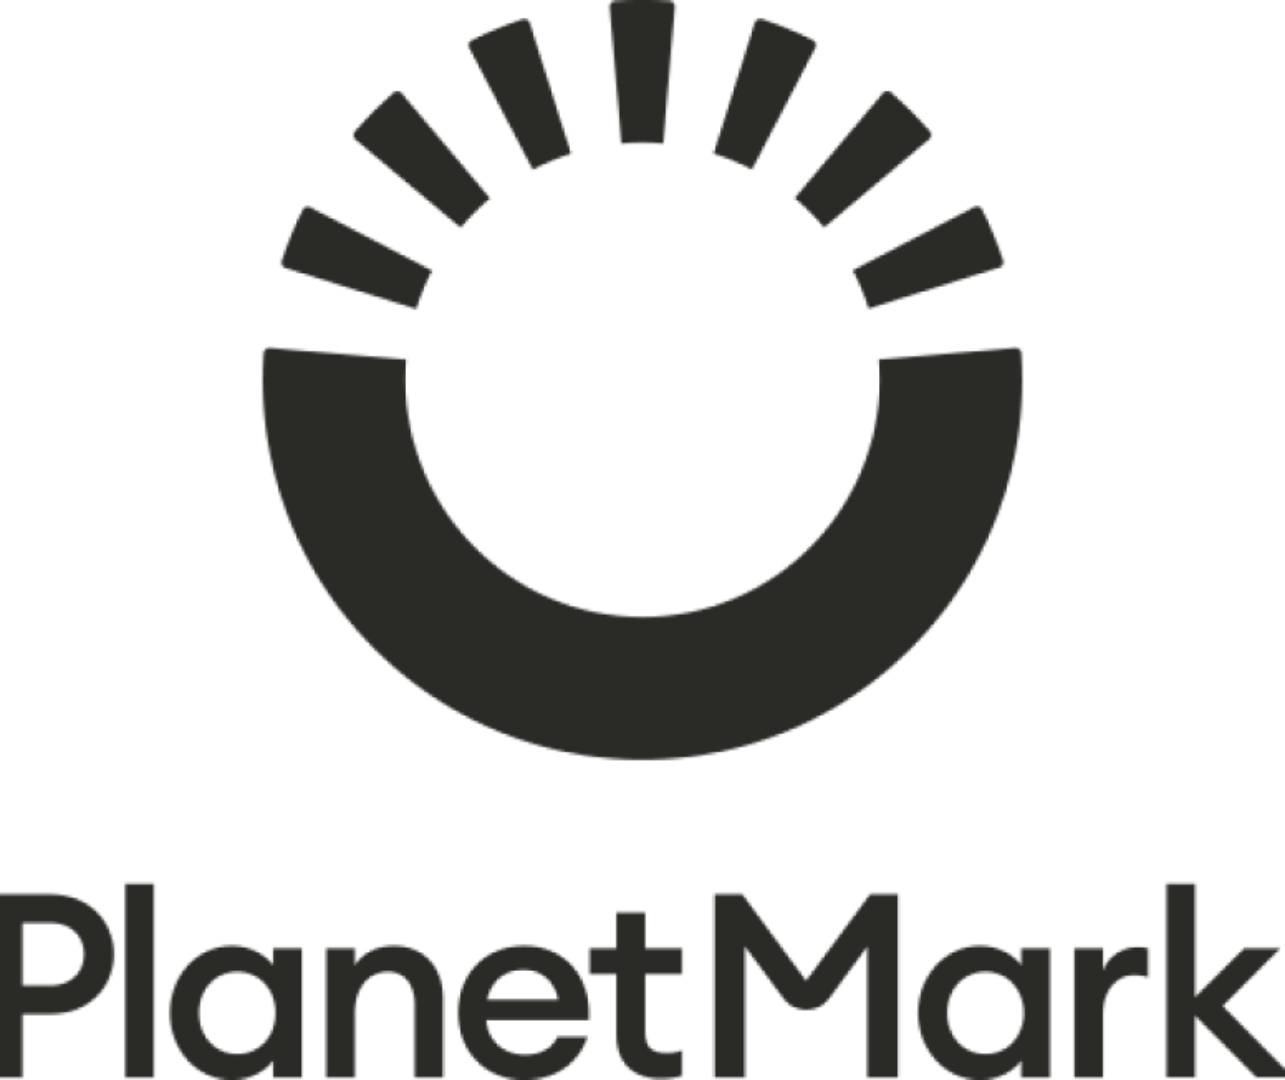 Accreditation by PlanetMark in progress